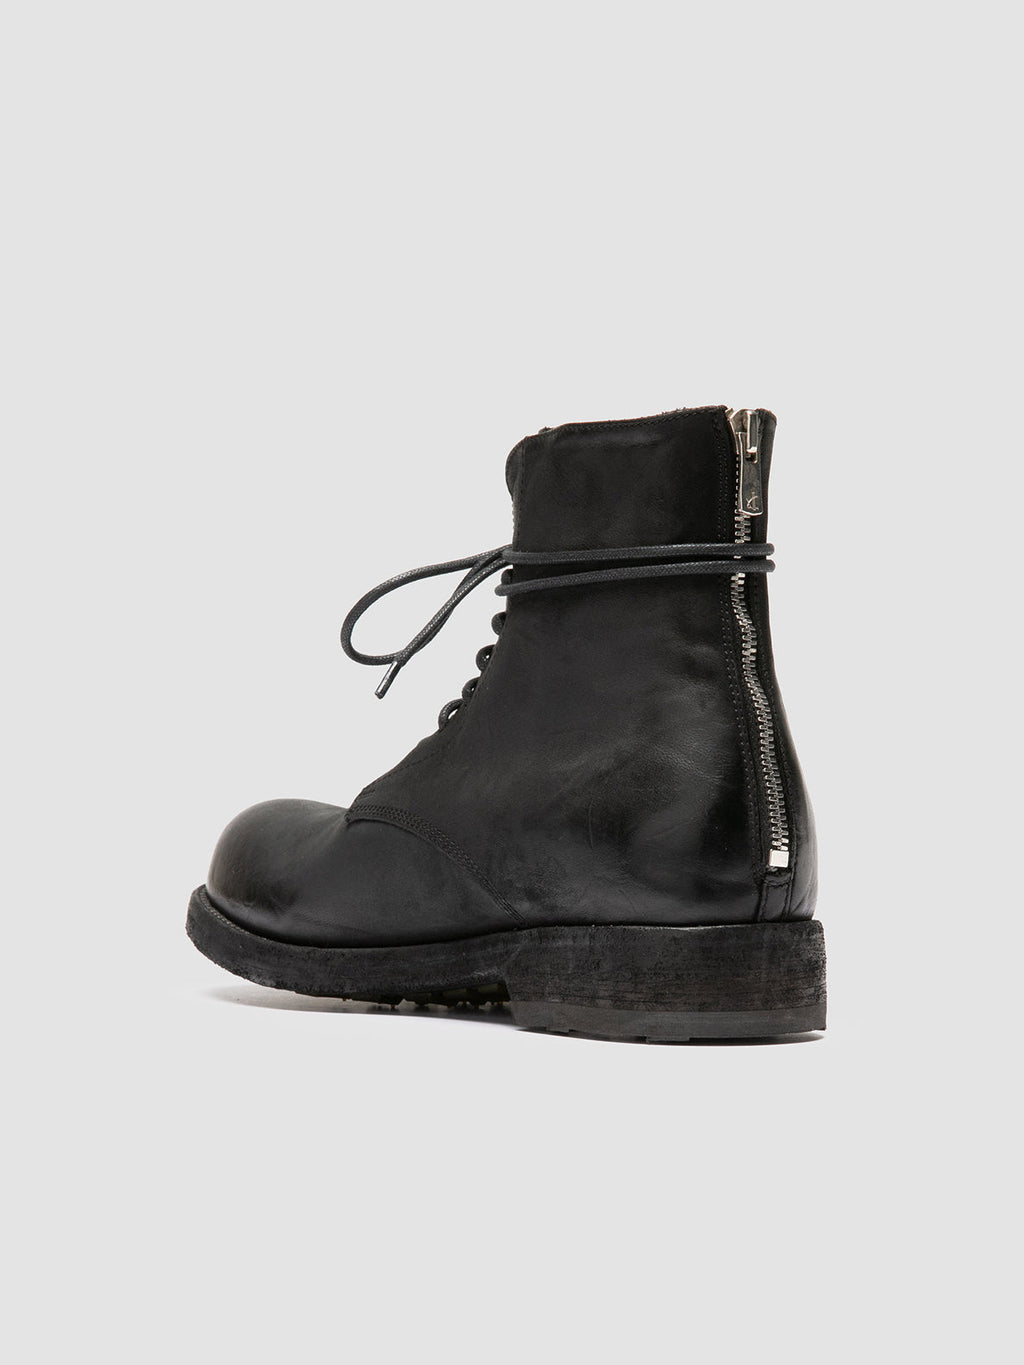 BULLA DD 102 - Black Leather Lace-up Boots Men Officine Creative - 4